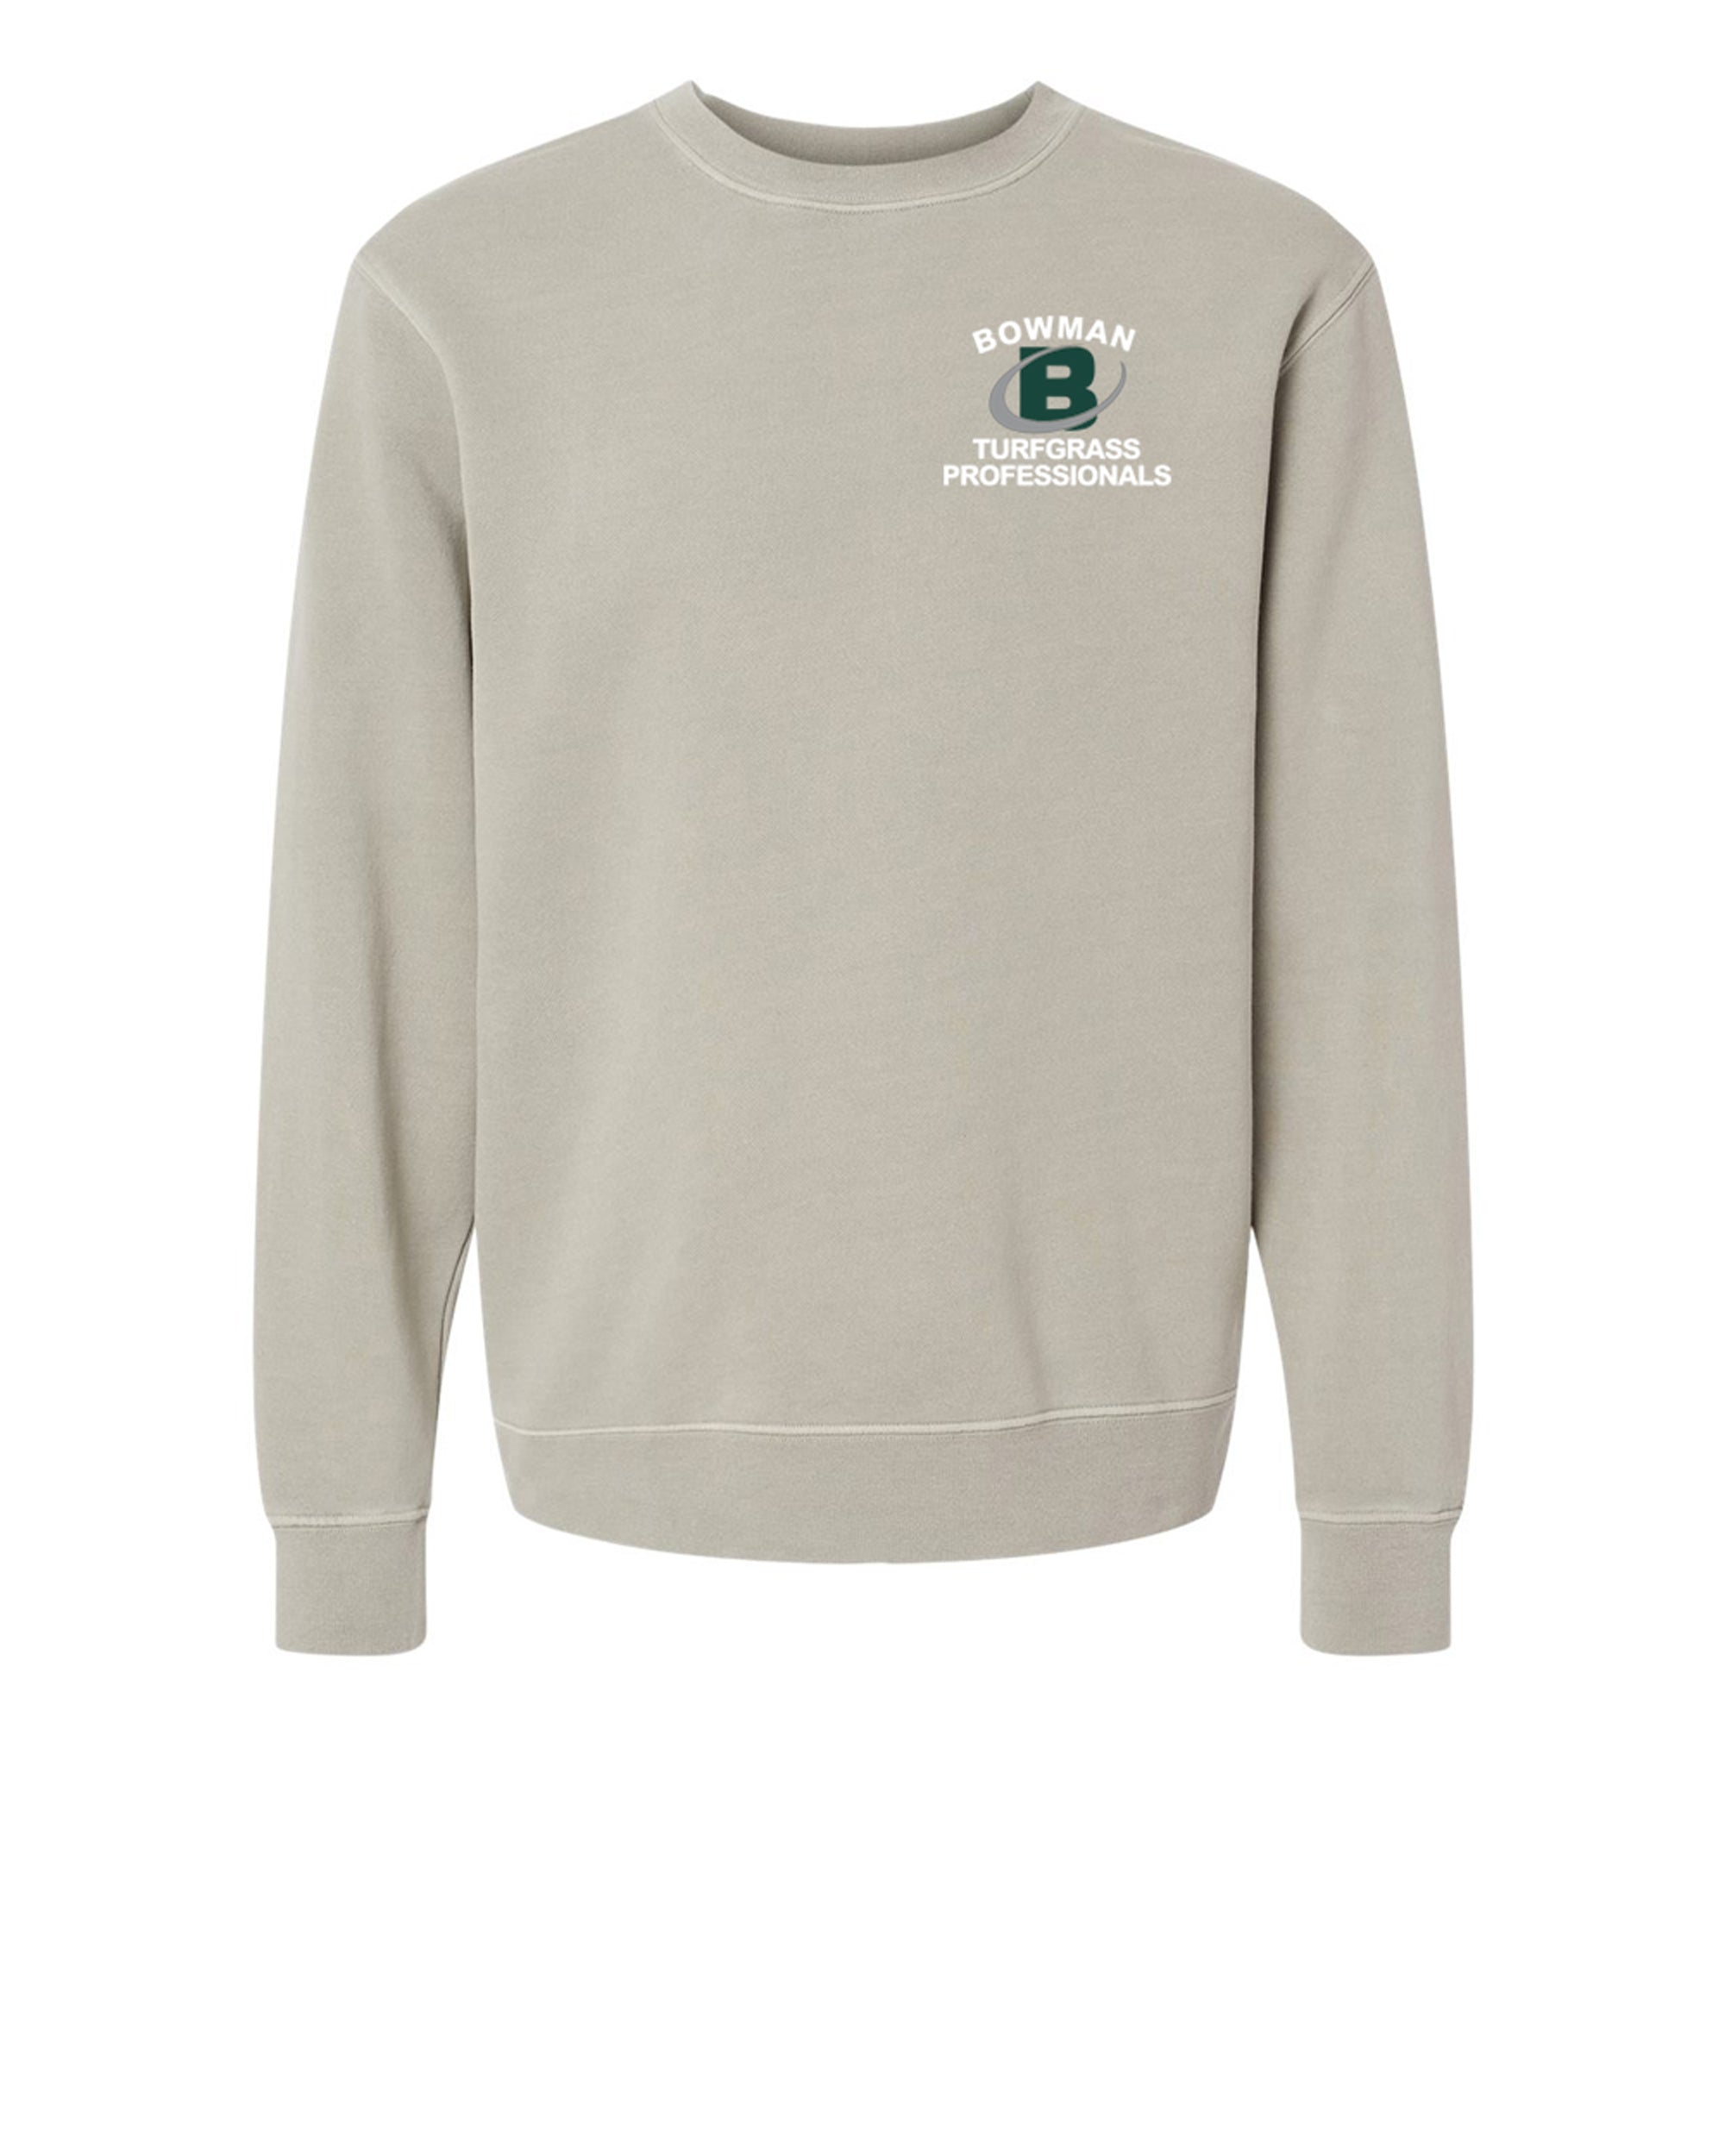 Bowman Turfgrass Professionals - Sweatshirt